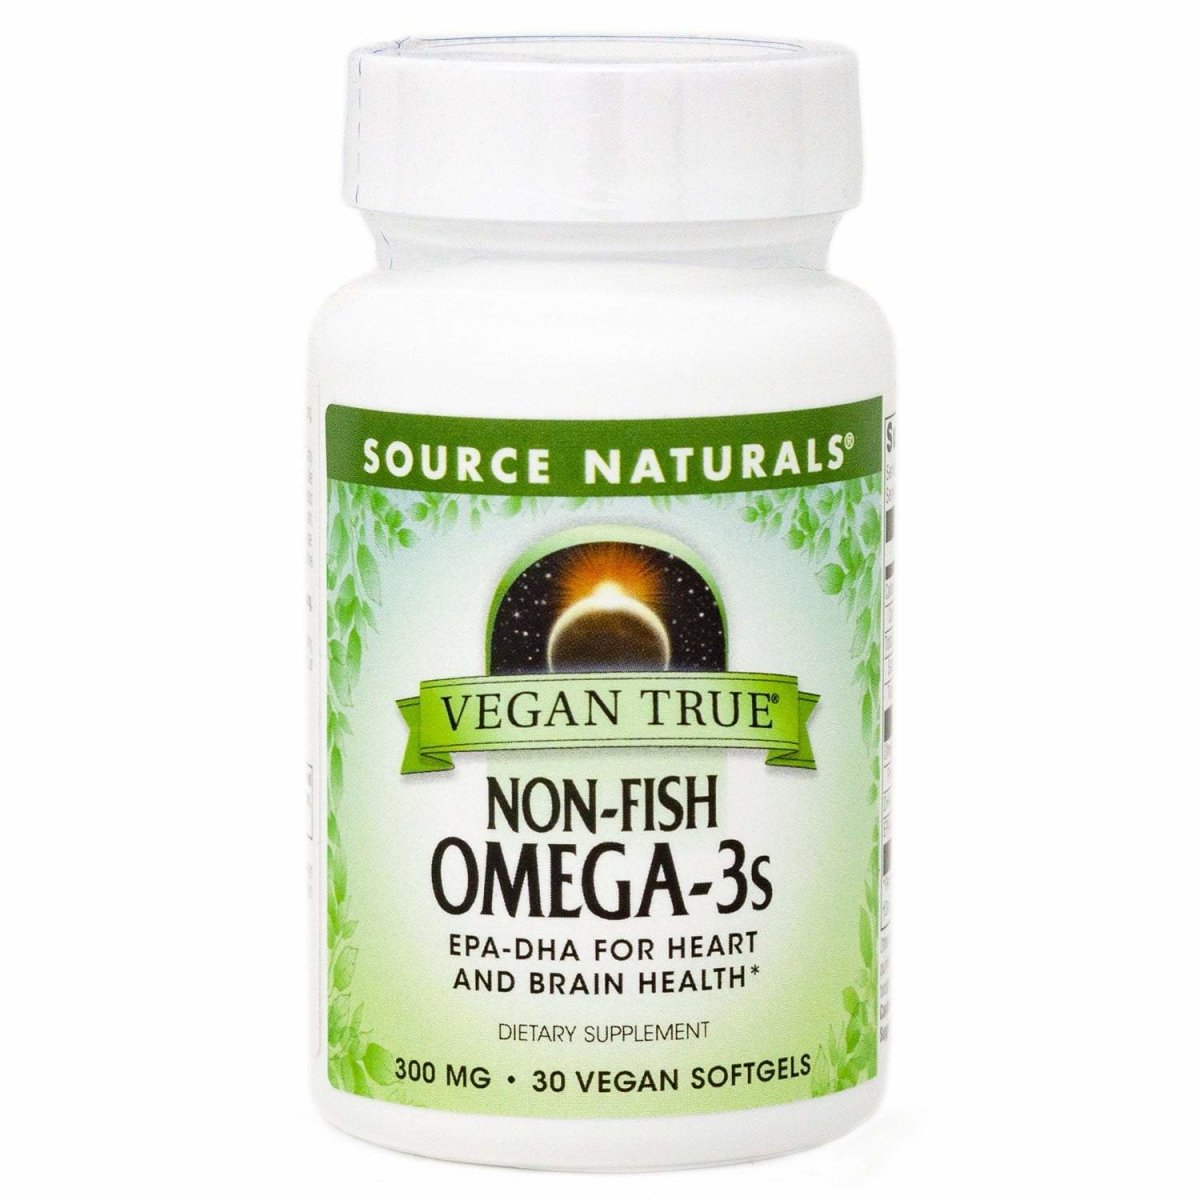 Source Naturals Vegan True Non-Fish Omega-3s EPA-DHA, for Heart and Brain Health